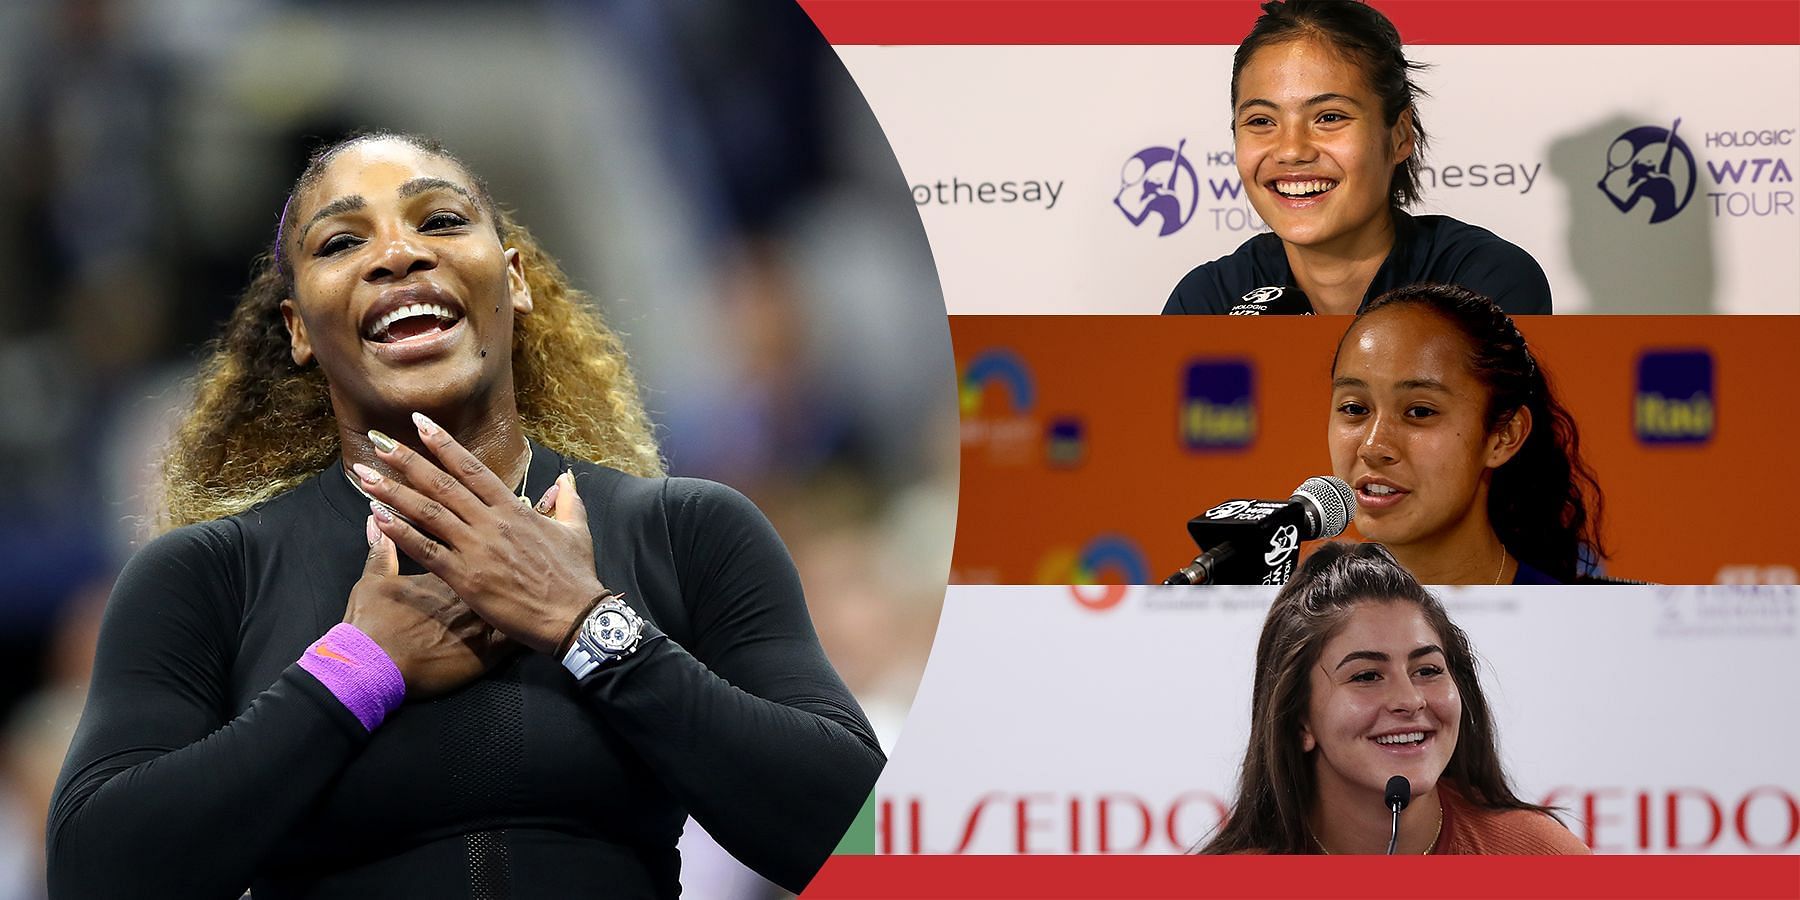 Emma Raducanu, Leylah Fernandez and Bianca Andreescu spoke highly of Serena Williams